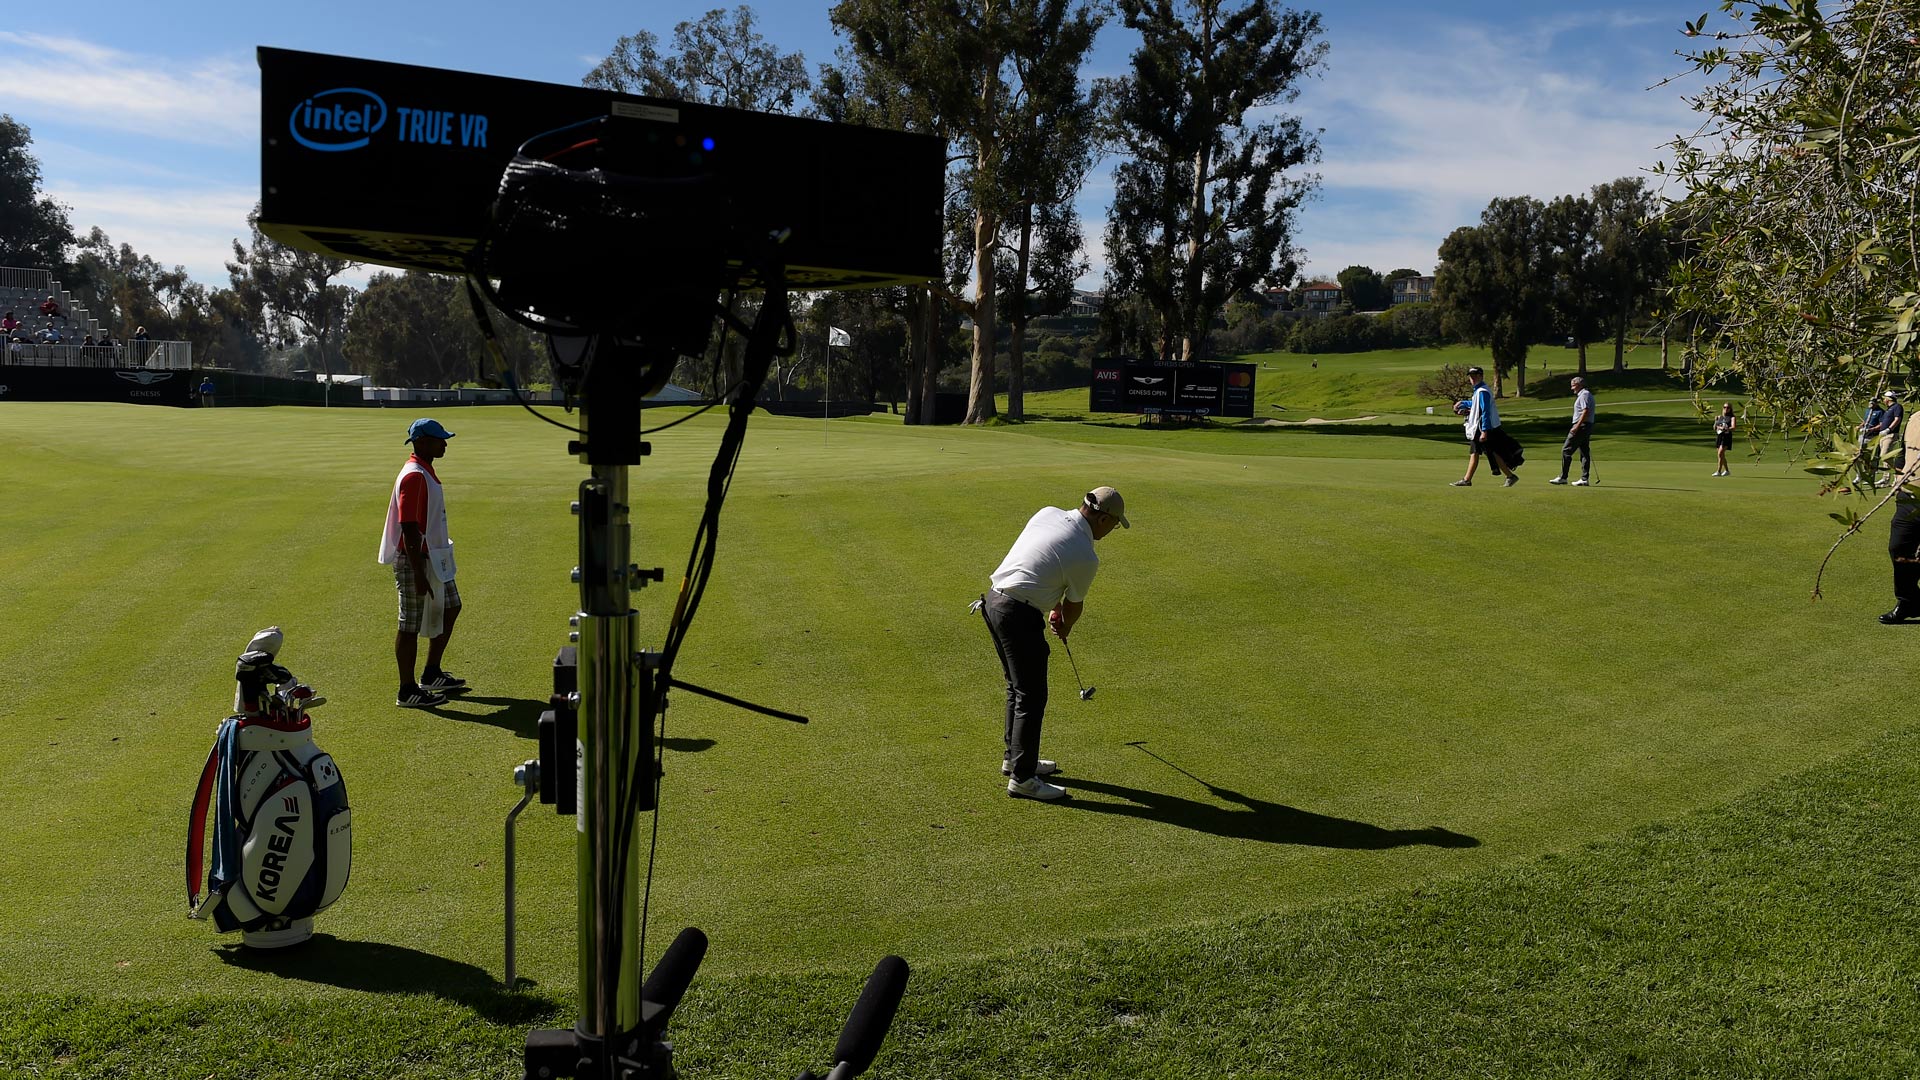 Intel to 360 Livestream PGA Tour at TPC Sawgrass Golf Course on Gear VR